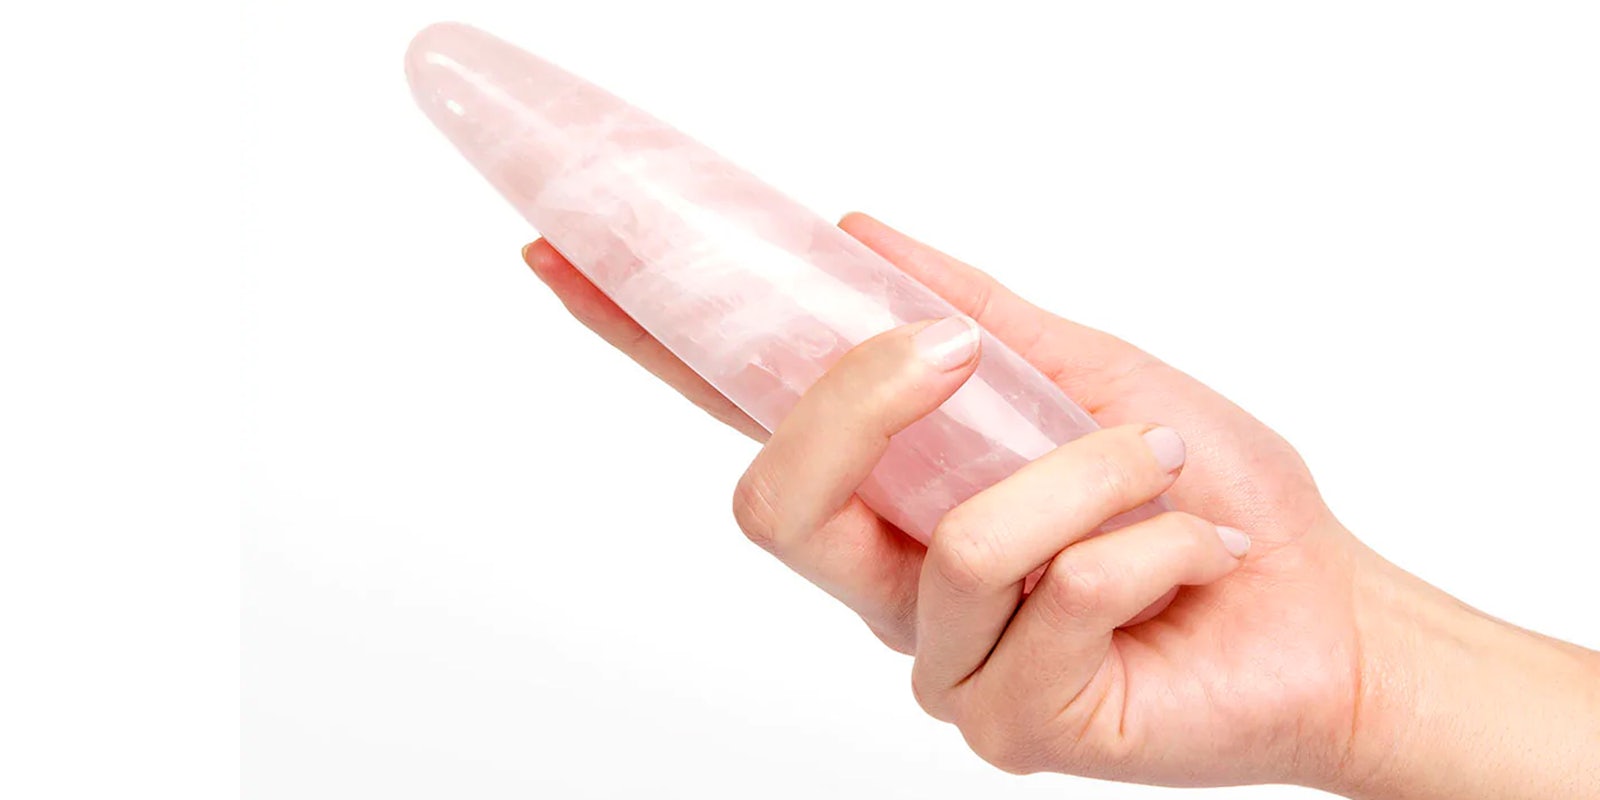 A hand holding the Chakrubs rose quartz wand against a white background